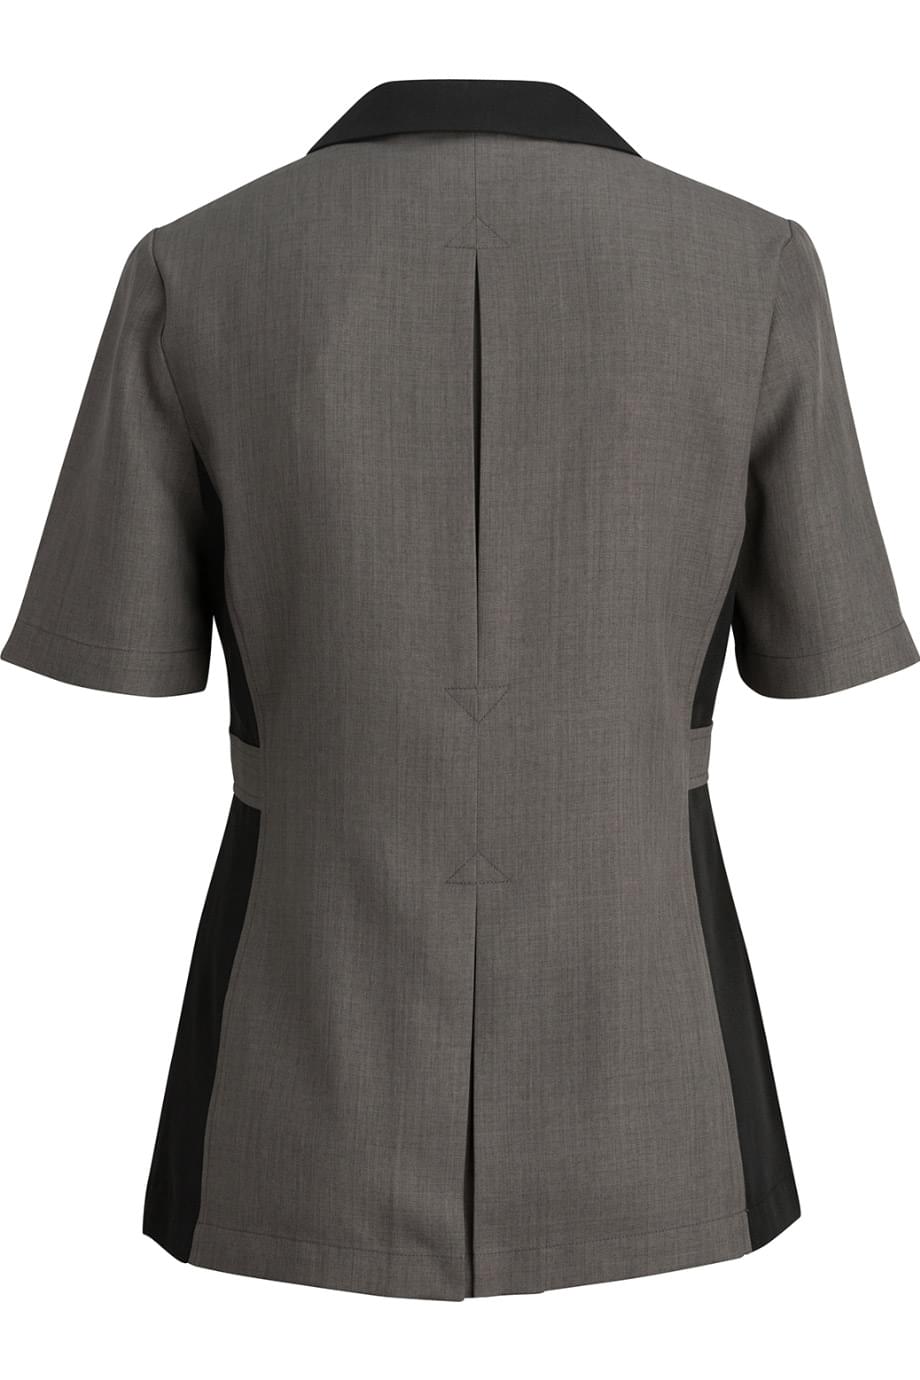 Premier Ladies Mika Short Sleeve Tunic - Shirtworks